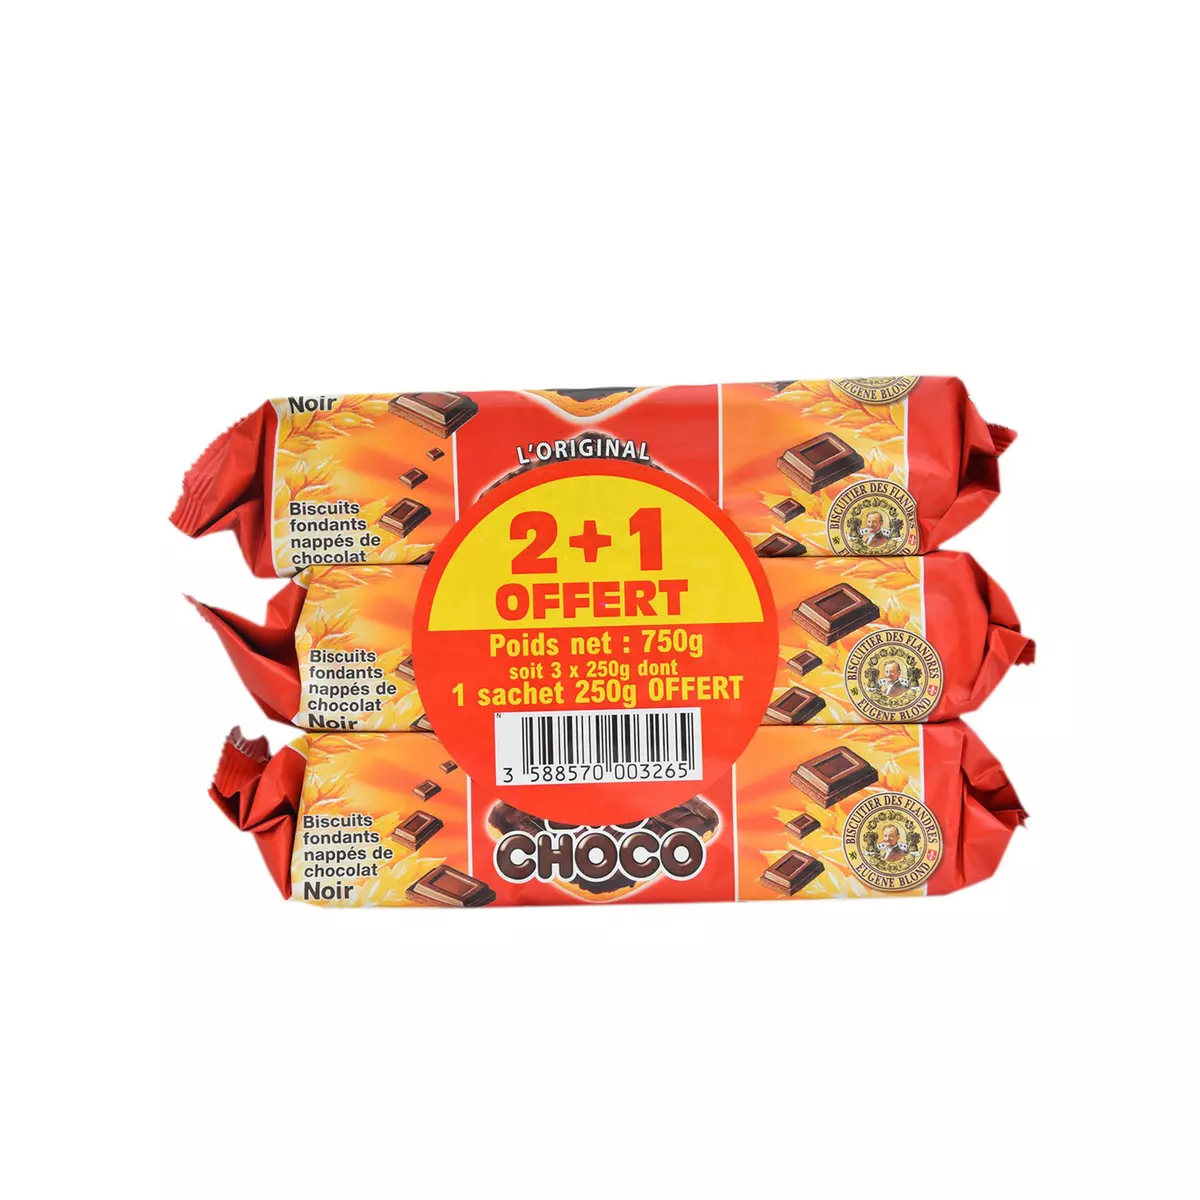 BIG CHOCO Biscuits fondants nappés de chocolat noir 2+1 offert 3x250g